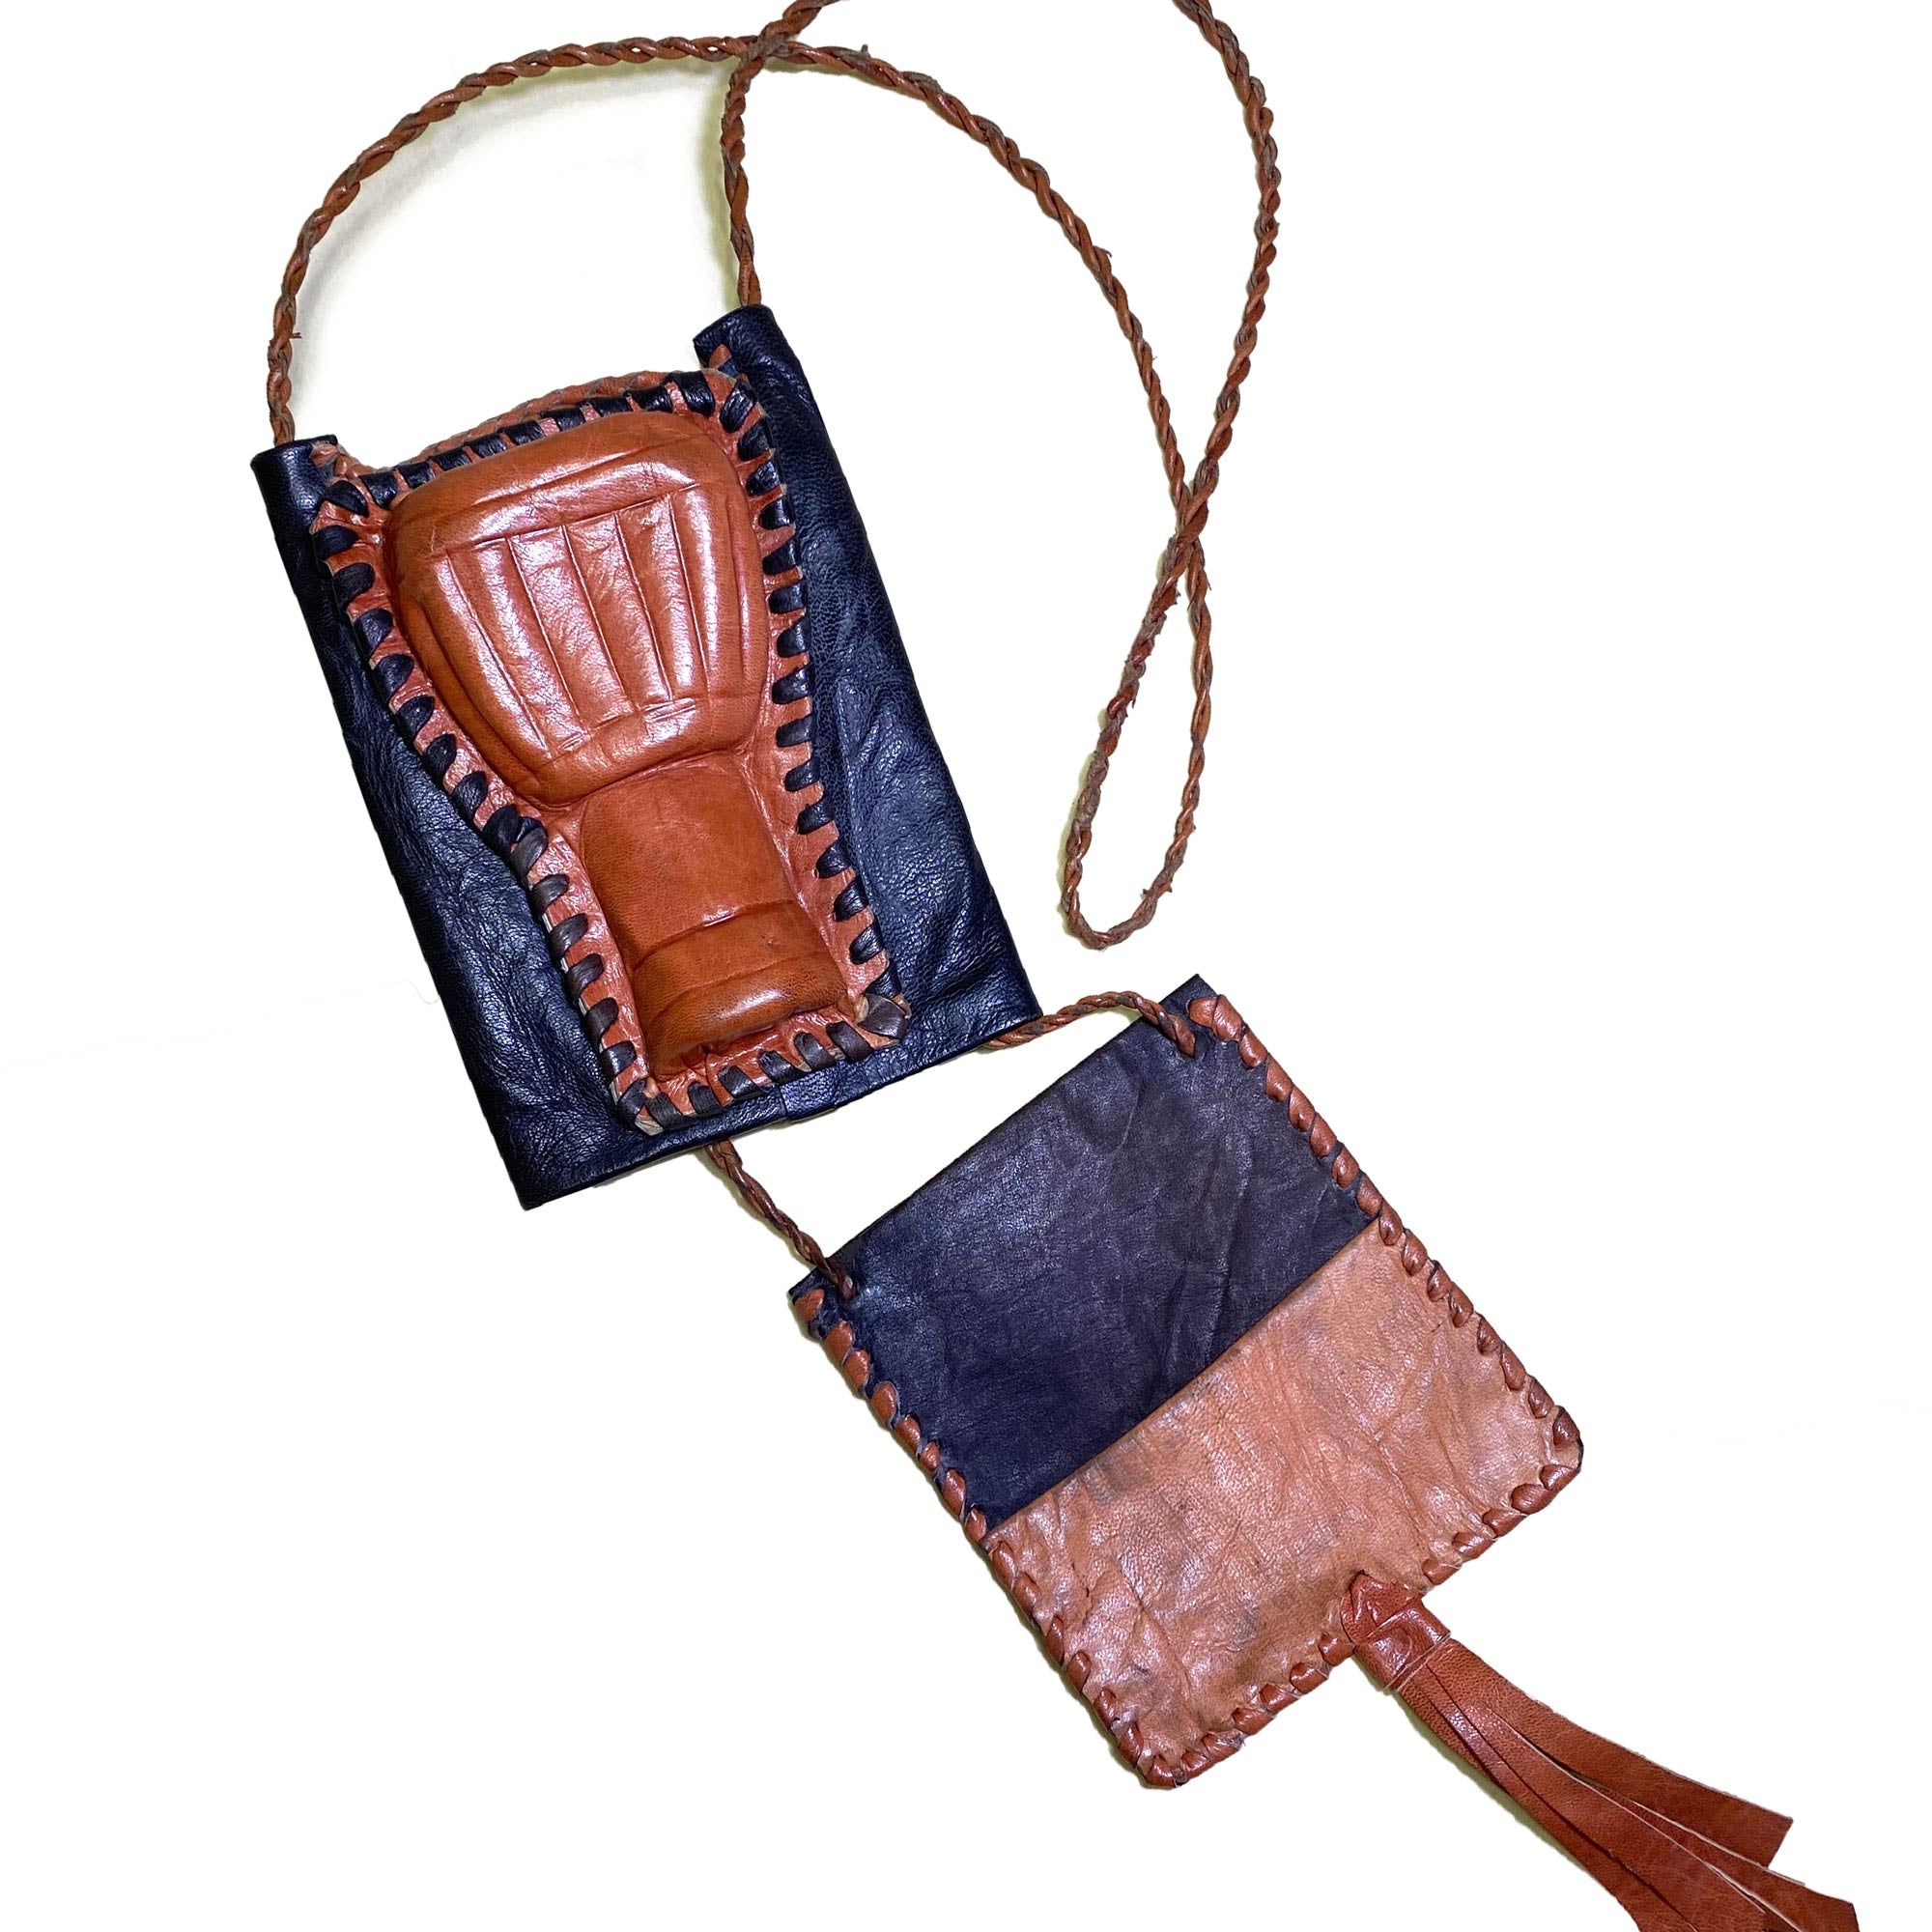 Ghana-Made Leather "Wallet Bag" (Drum)